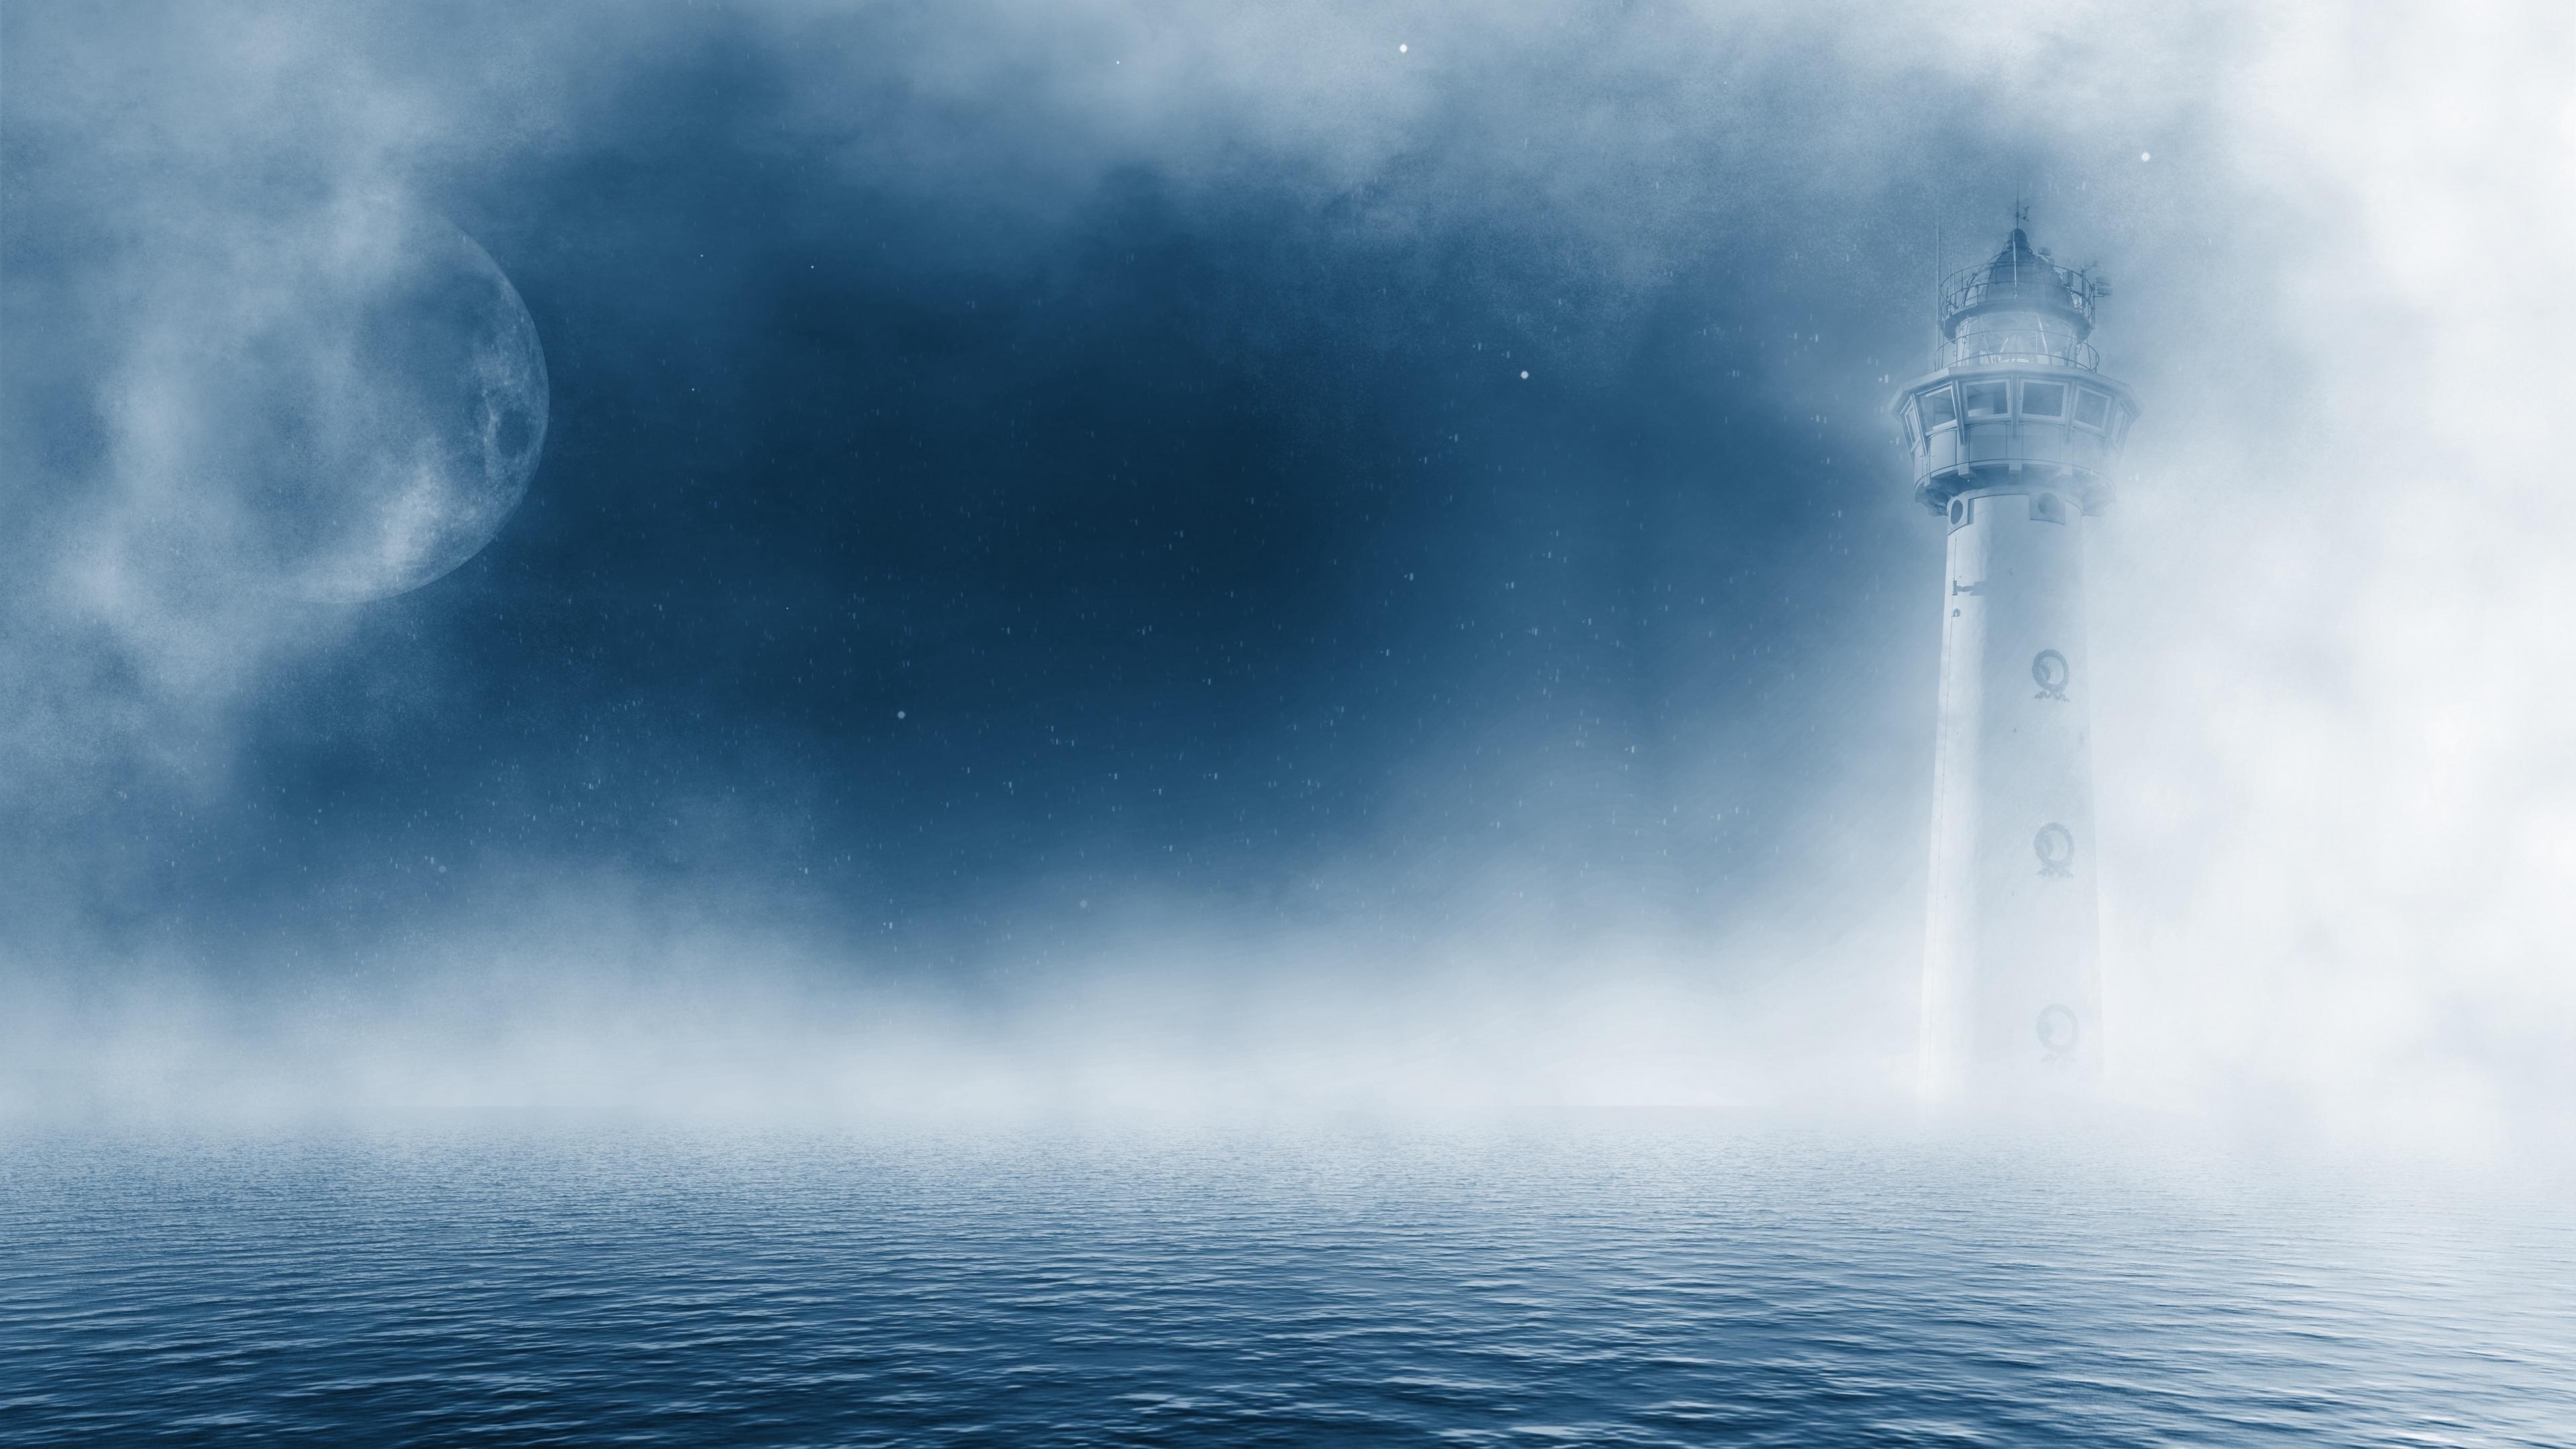 Download wallpaper 3840x2160 lighthouse, sea, fog, clouds 4k uhd 16